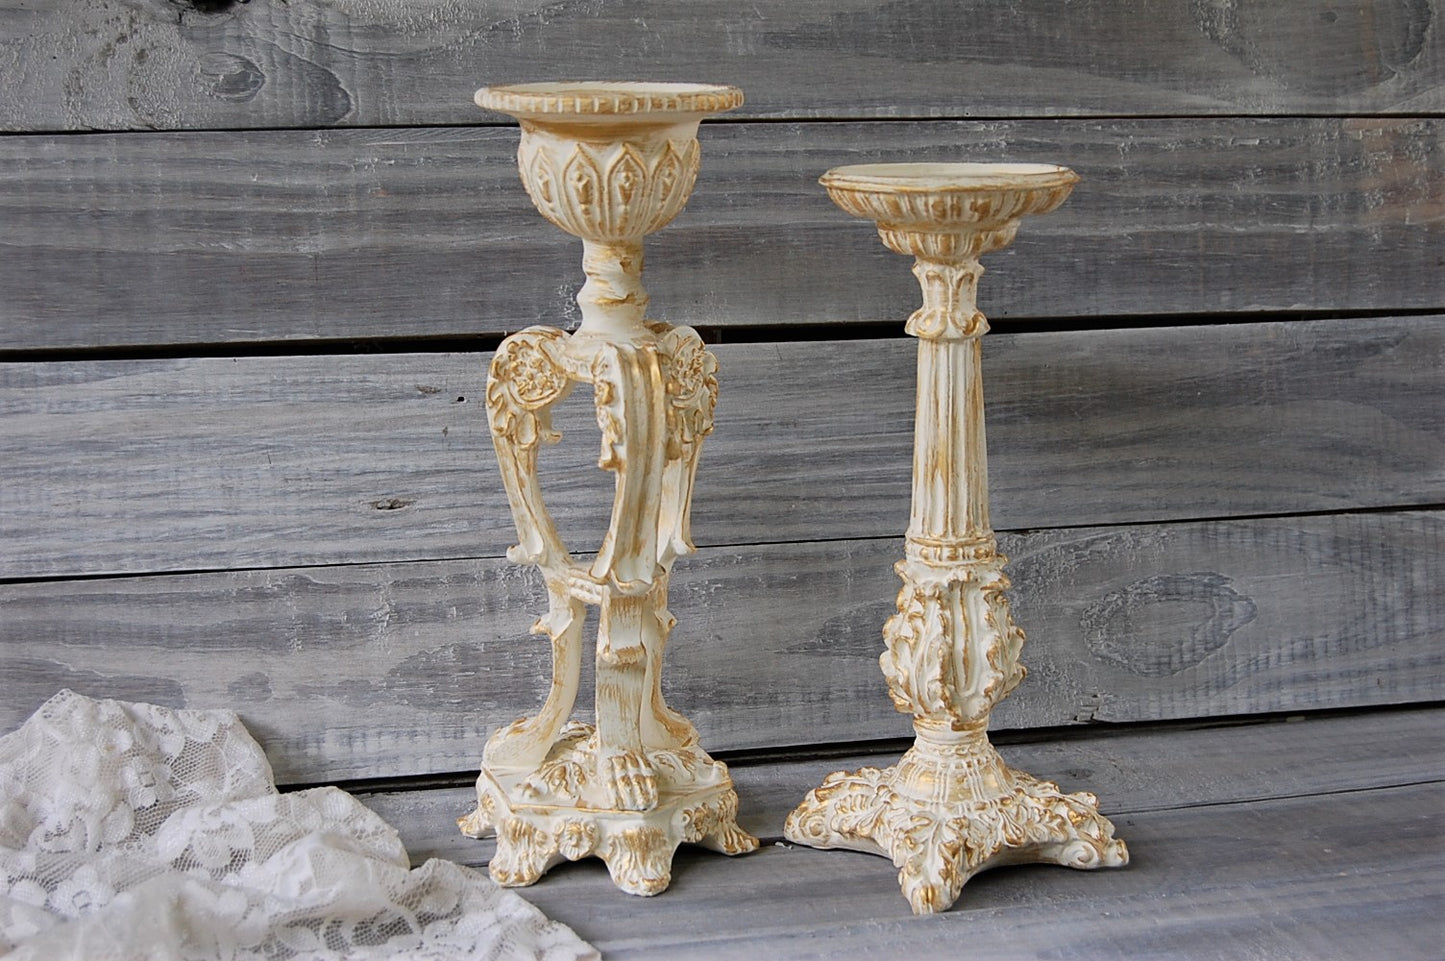 Ivory & gold candlesticks